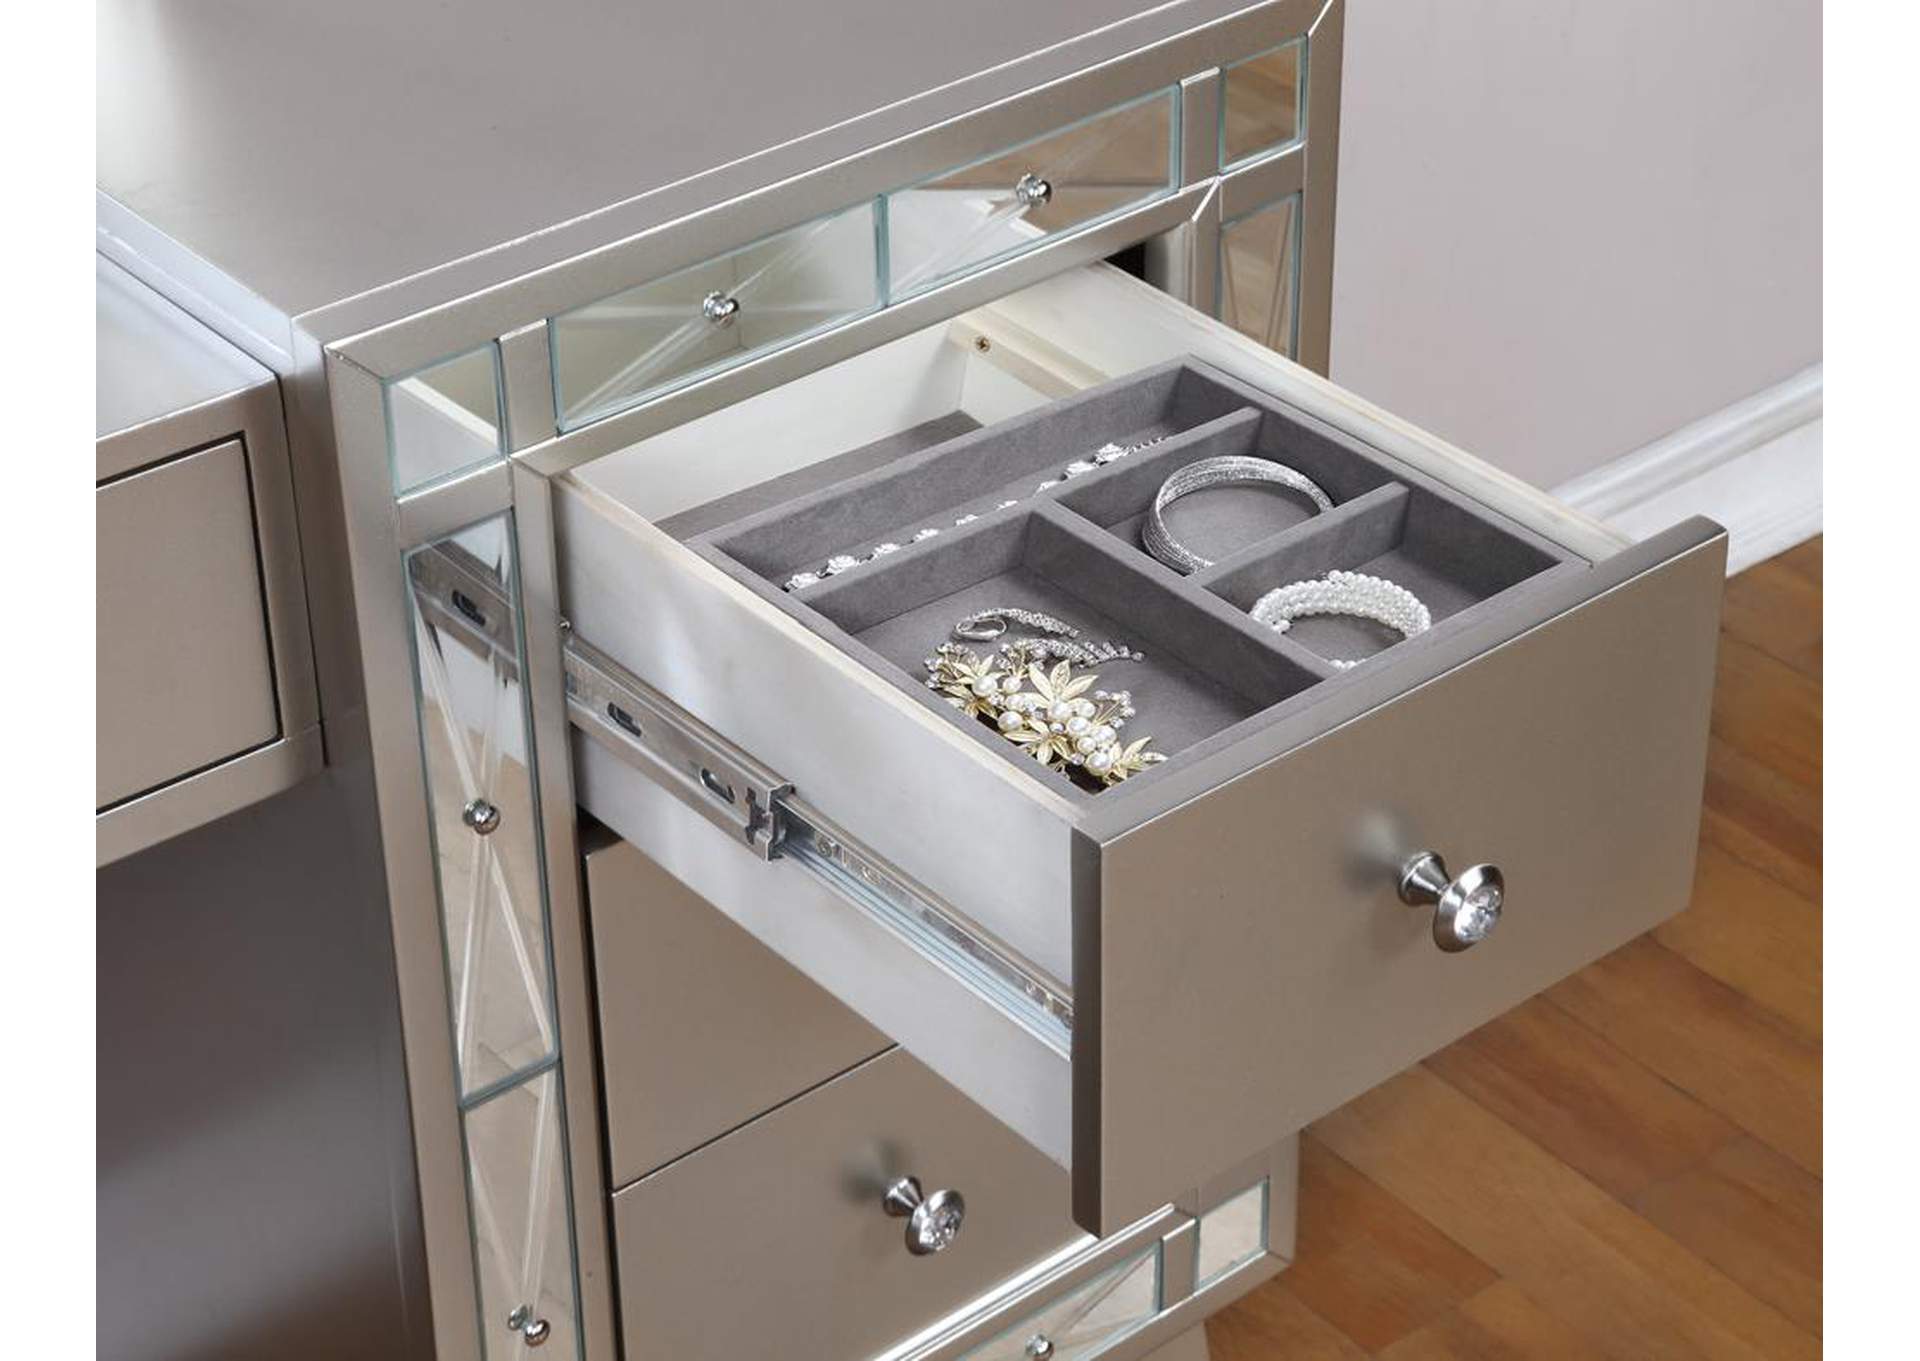 Metallic Grey Leighton Contemporary Vanity Desk And Stool,Coaster Furniture